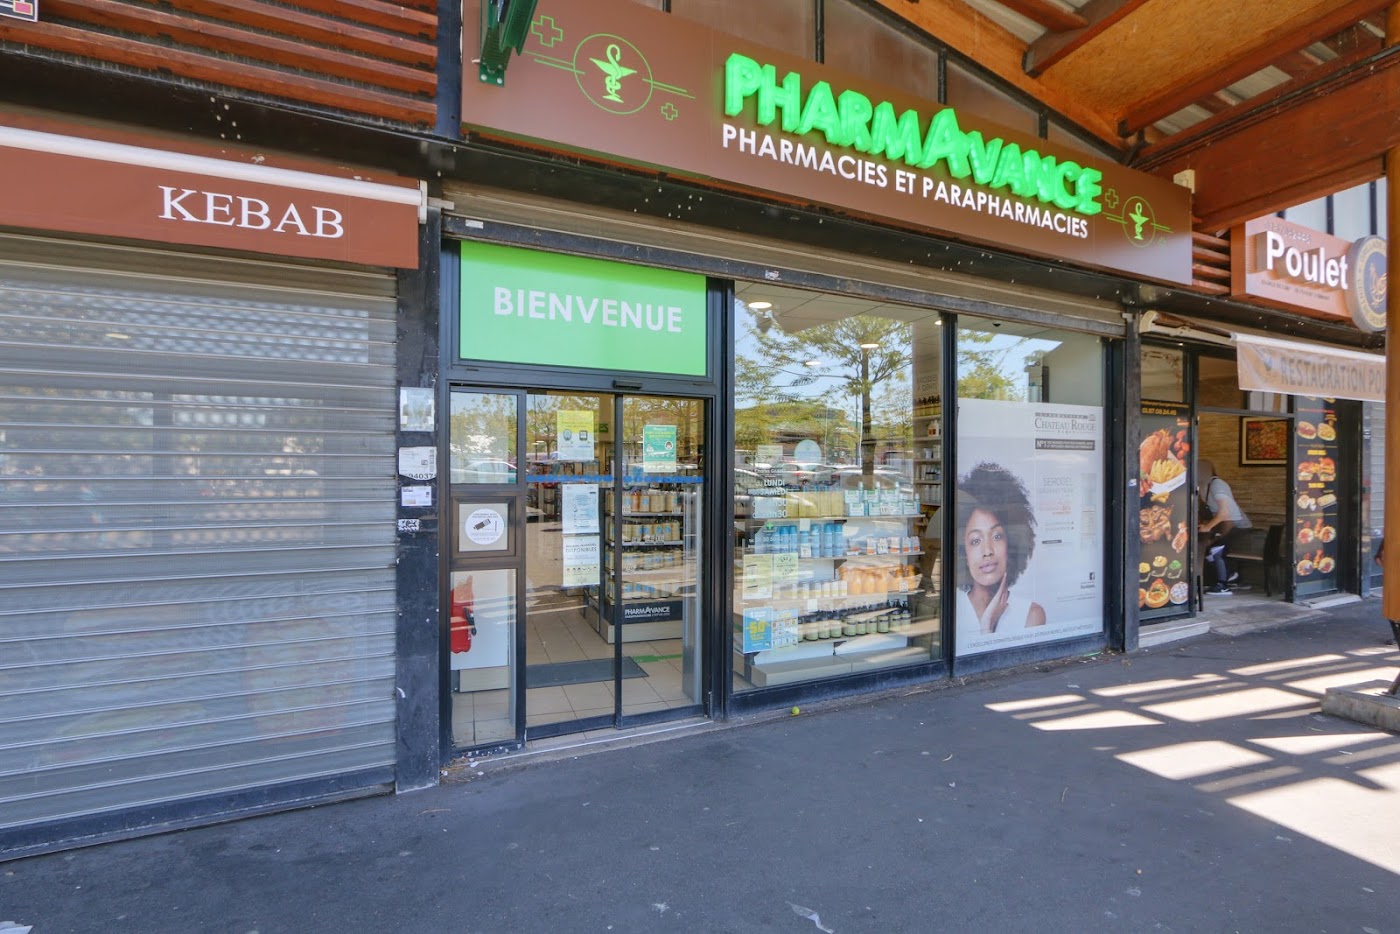 Pharmacie Pharmavance Trappes